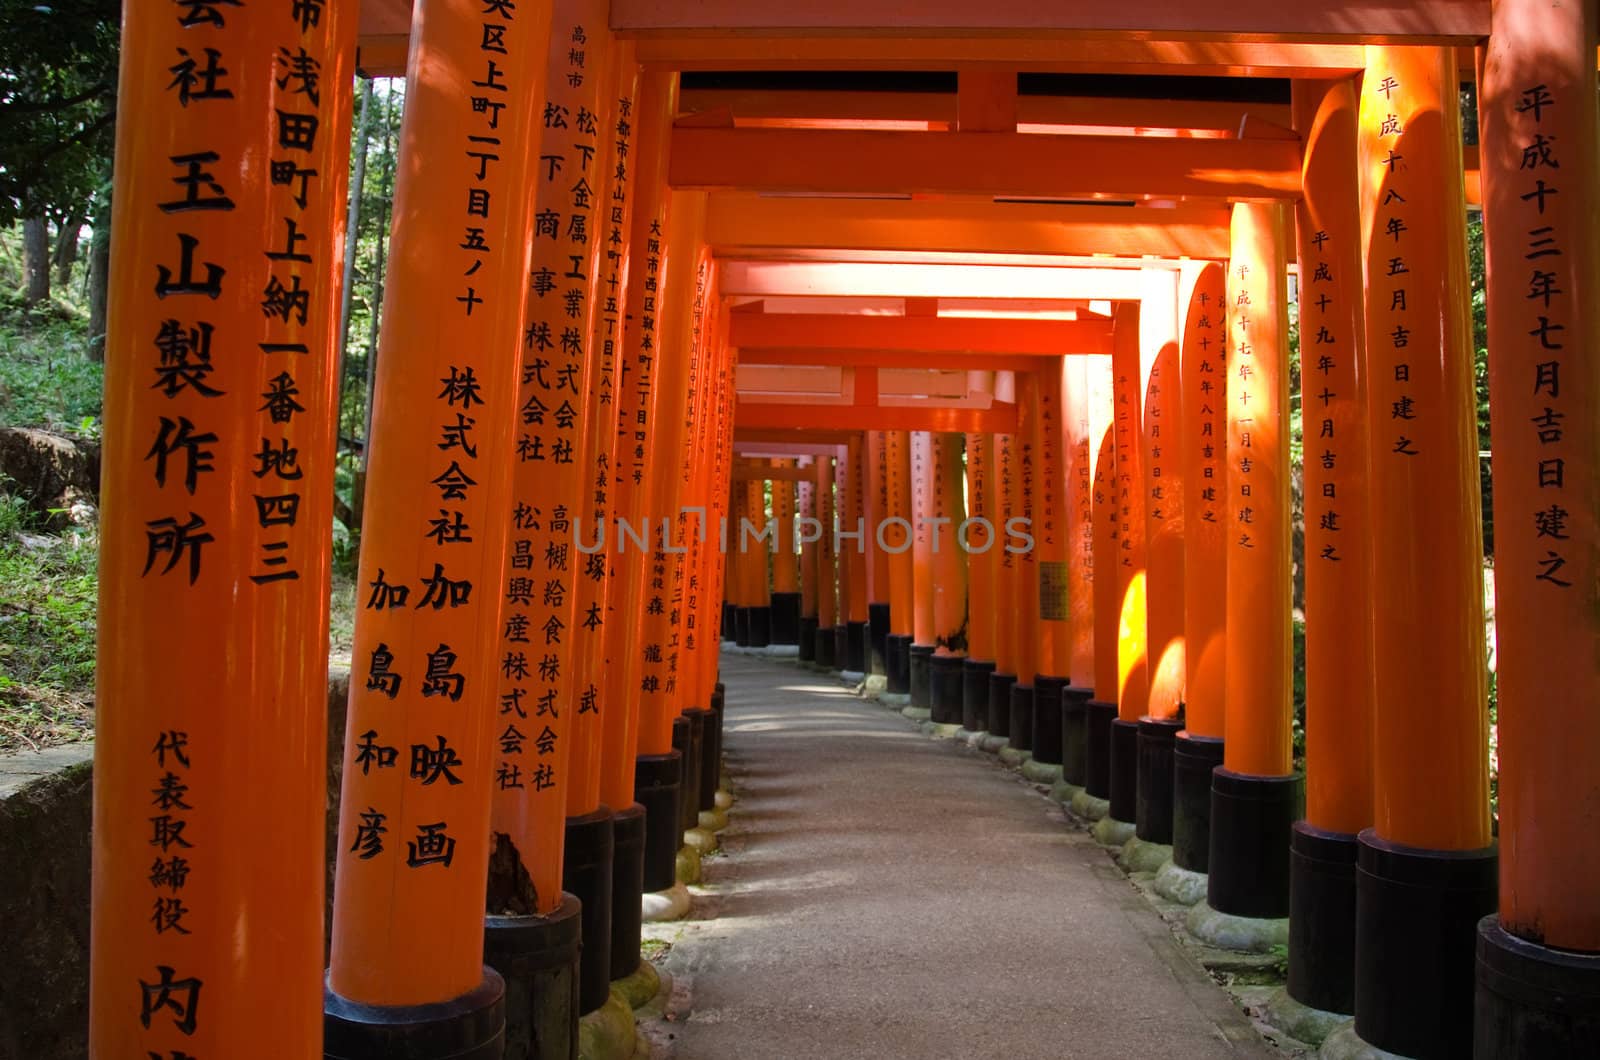 Torii Gates at the Fushimi Inari Taisha Shrine in Kyoto, Japan